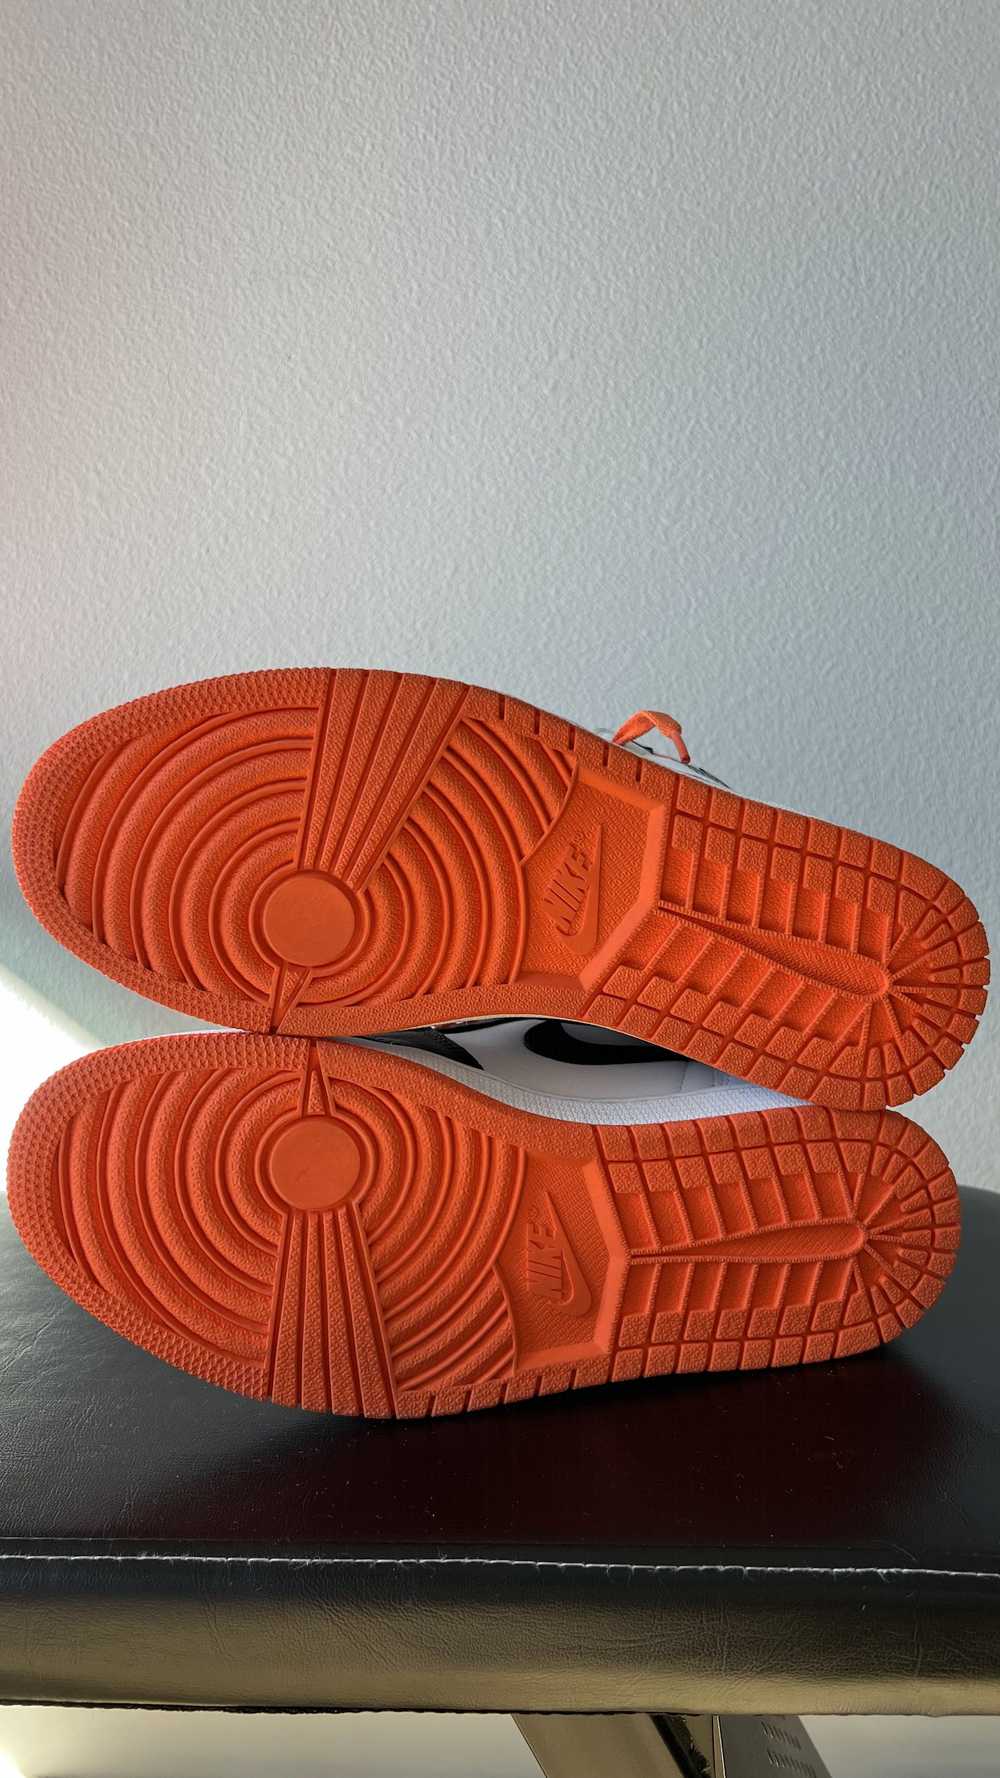 Jordan Brand × Nike Air Jordan 1 Electro Orange - image 2